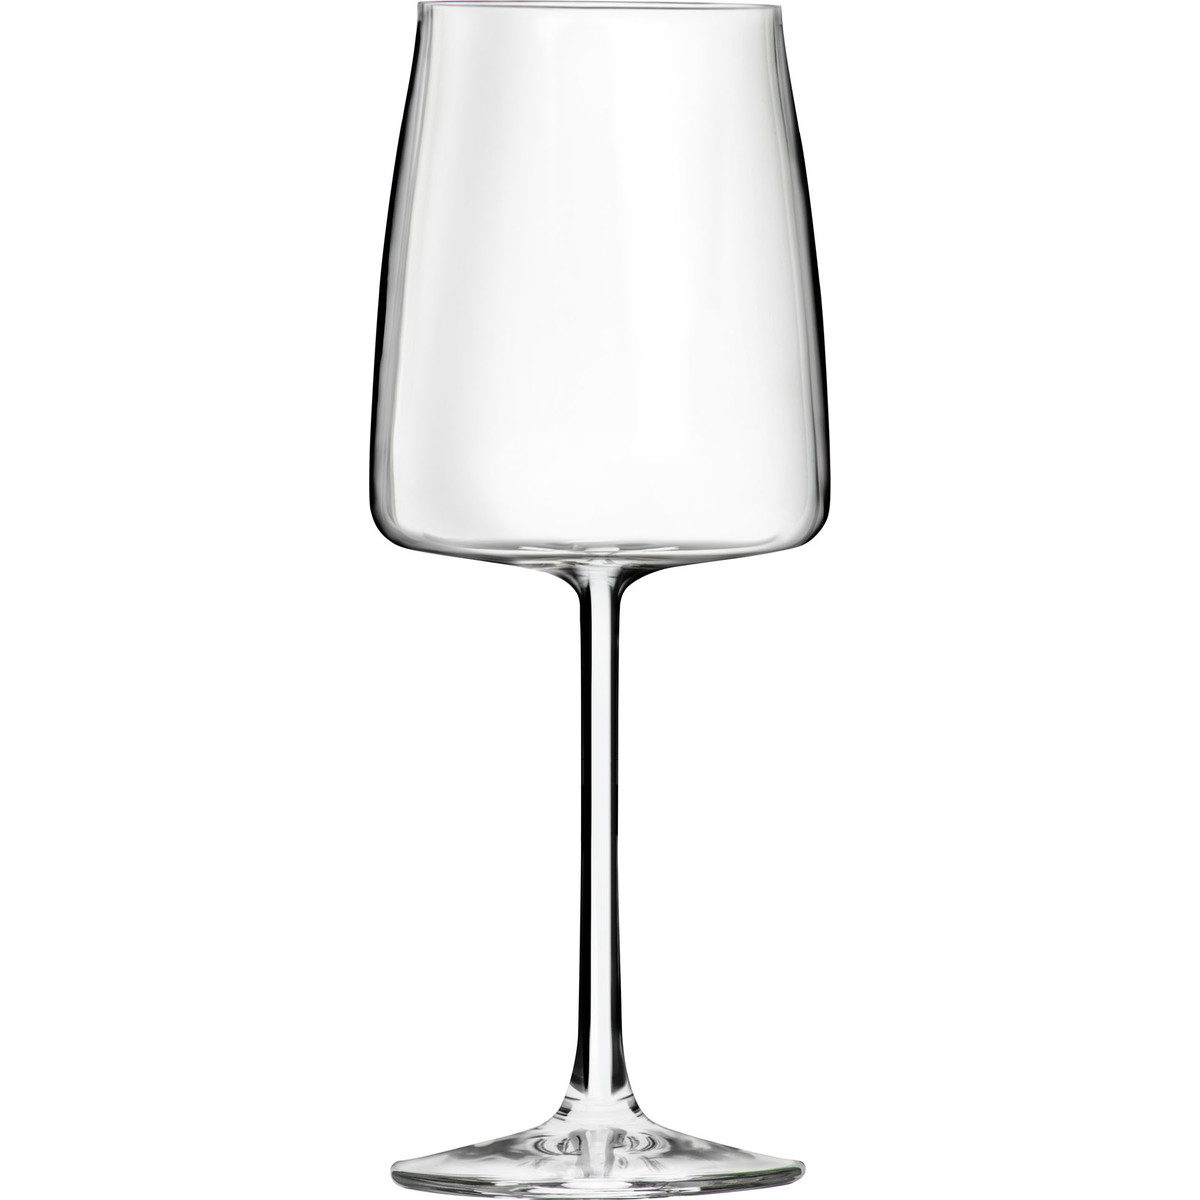 Glasserie "Essential" Weißweinglas 430ml